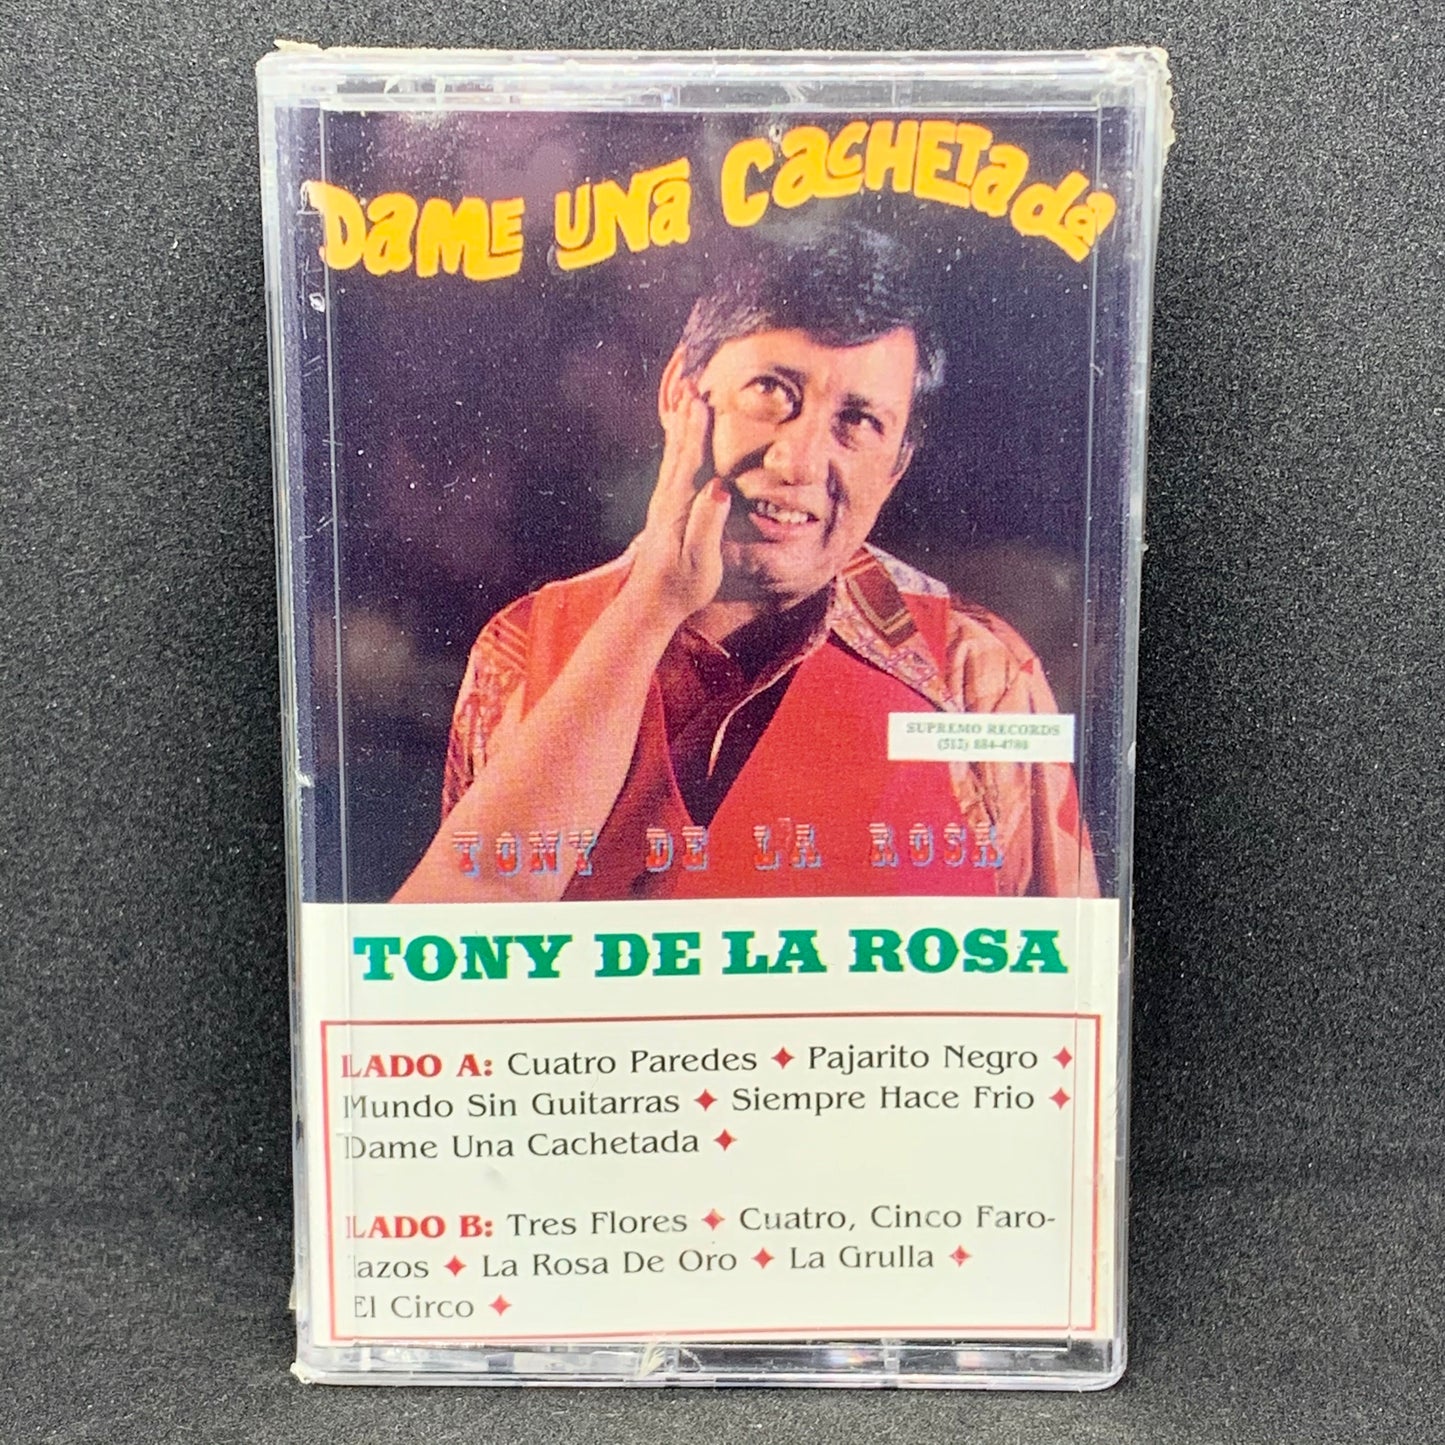 Tony De La Rosa - Dame Una Cachetada (Cassette)